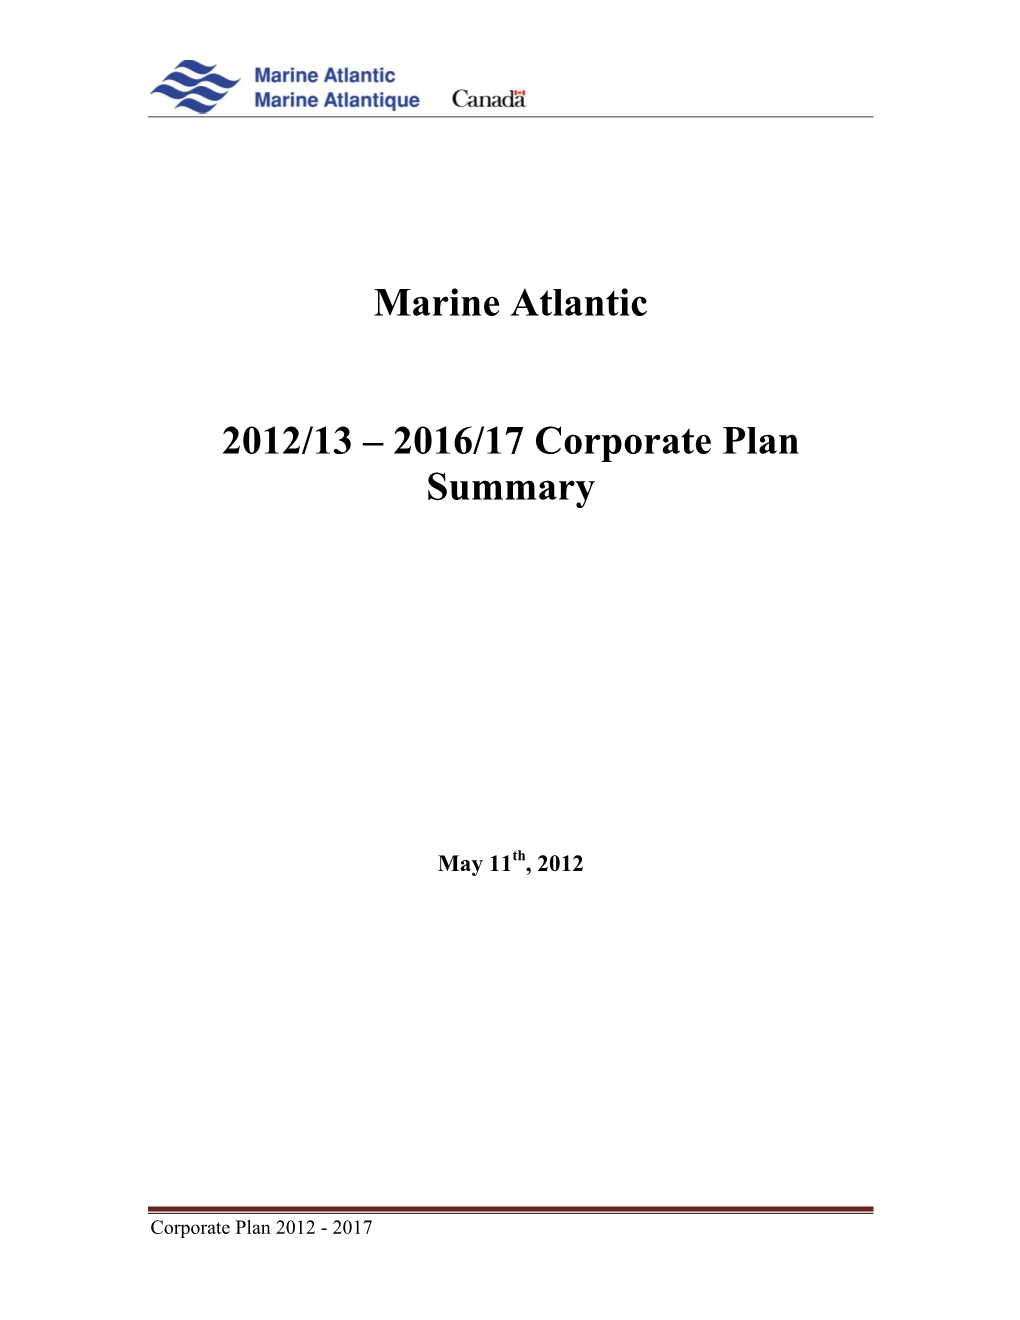 Marine Atlantic 2012/13 – 2016/17 Corporate Plan Summary